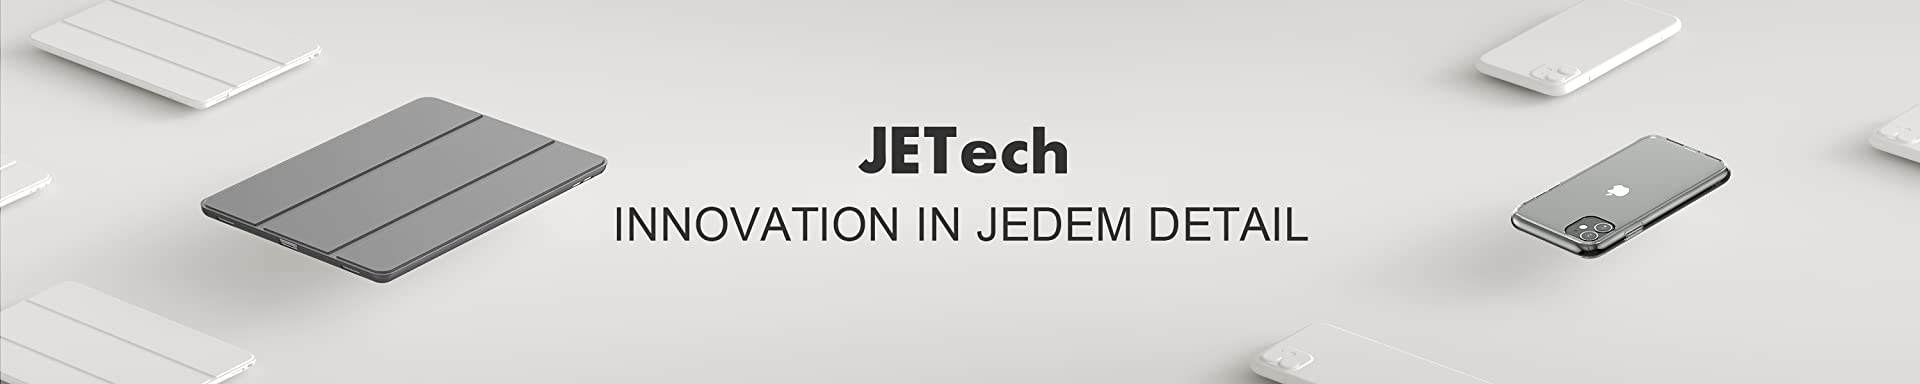 Pokrowce na laptop-Baner marki JeTech